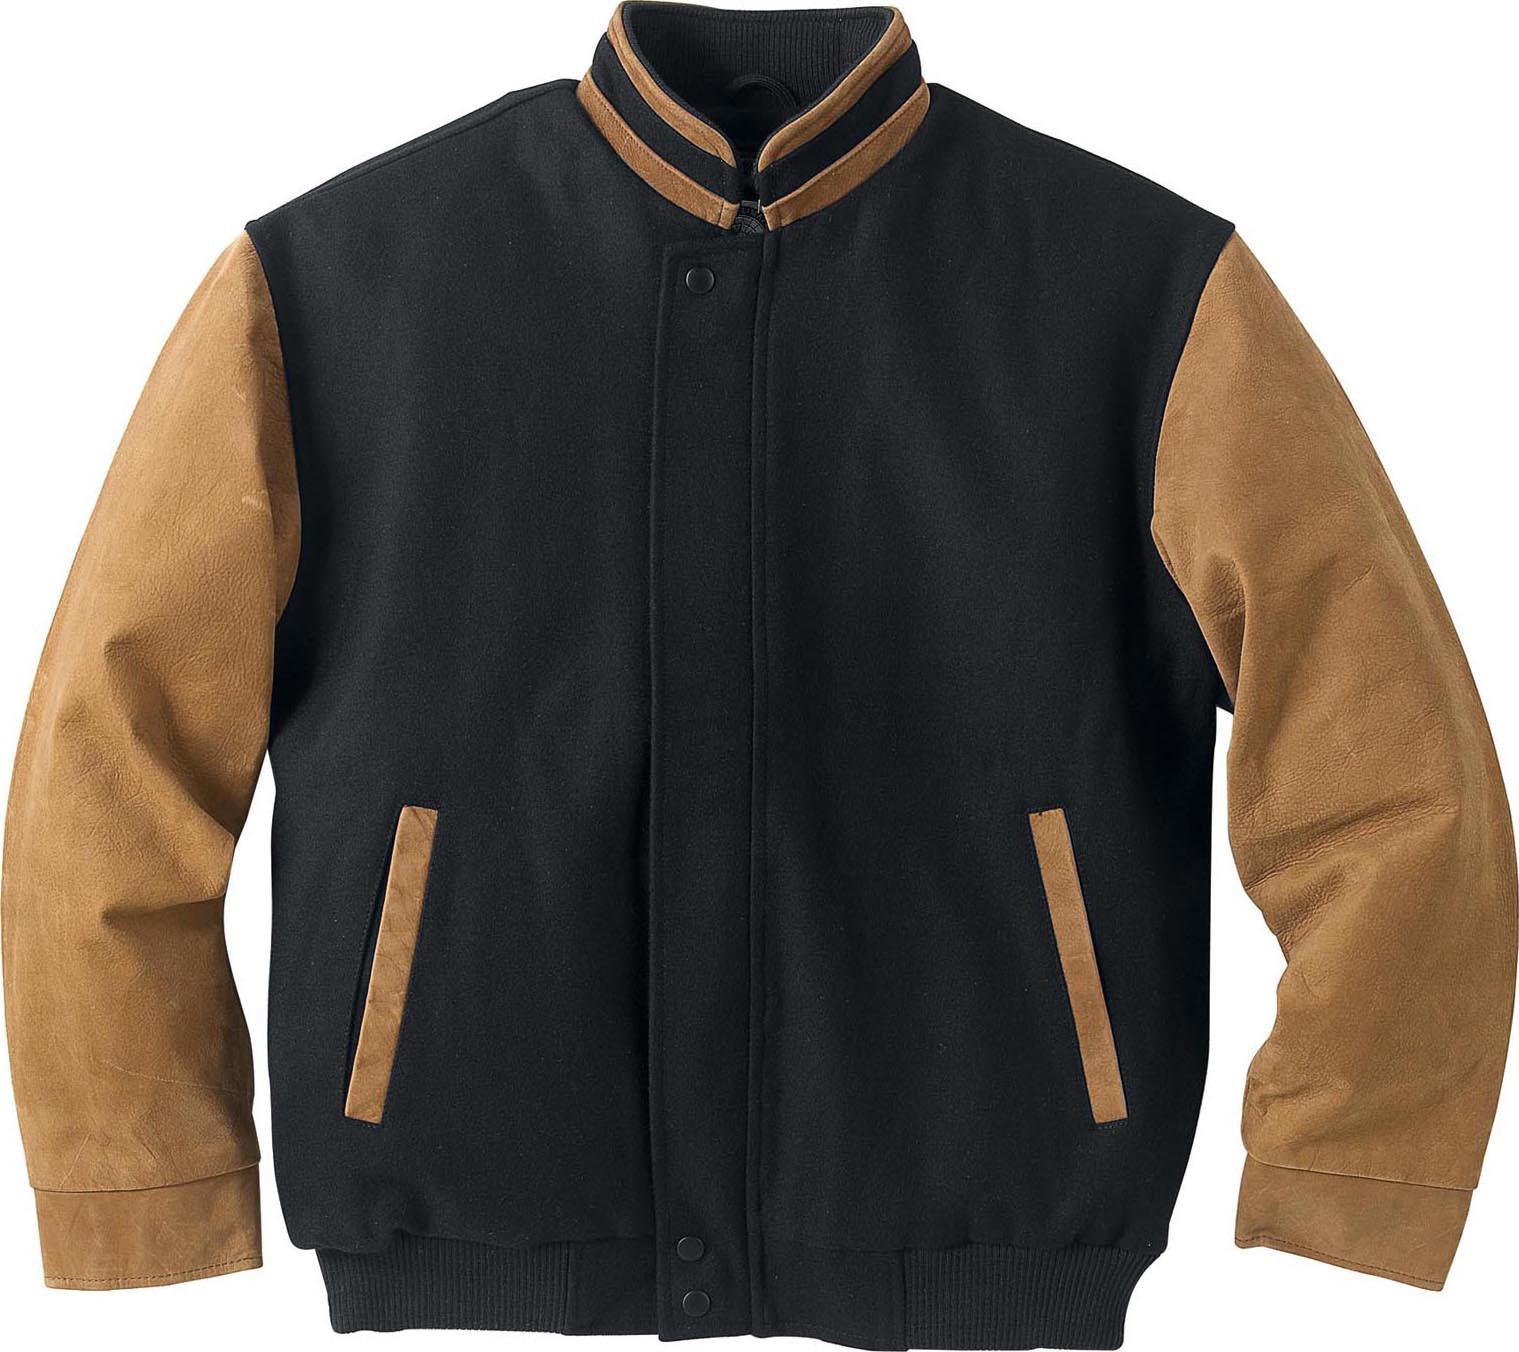 Ash City Classic 88075 - Men's Melton Nubuck Jacket With Stand Collar